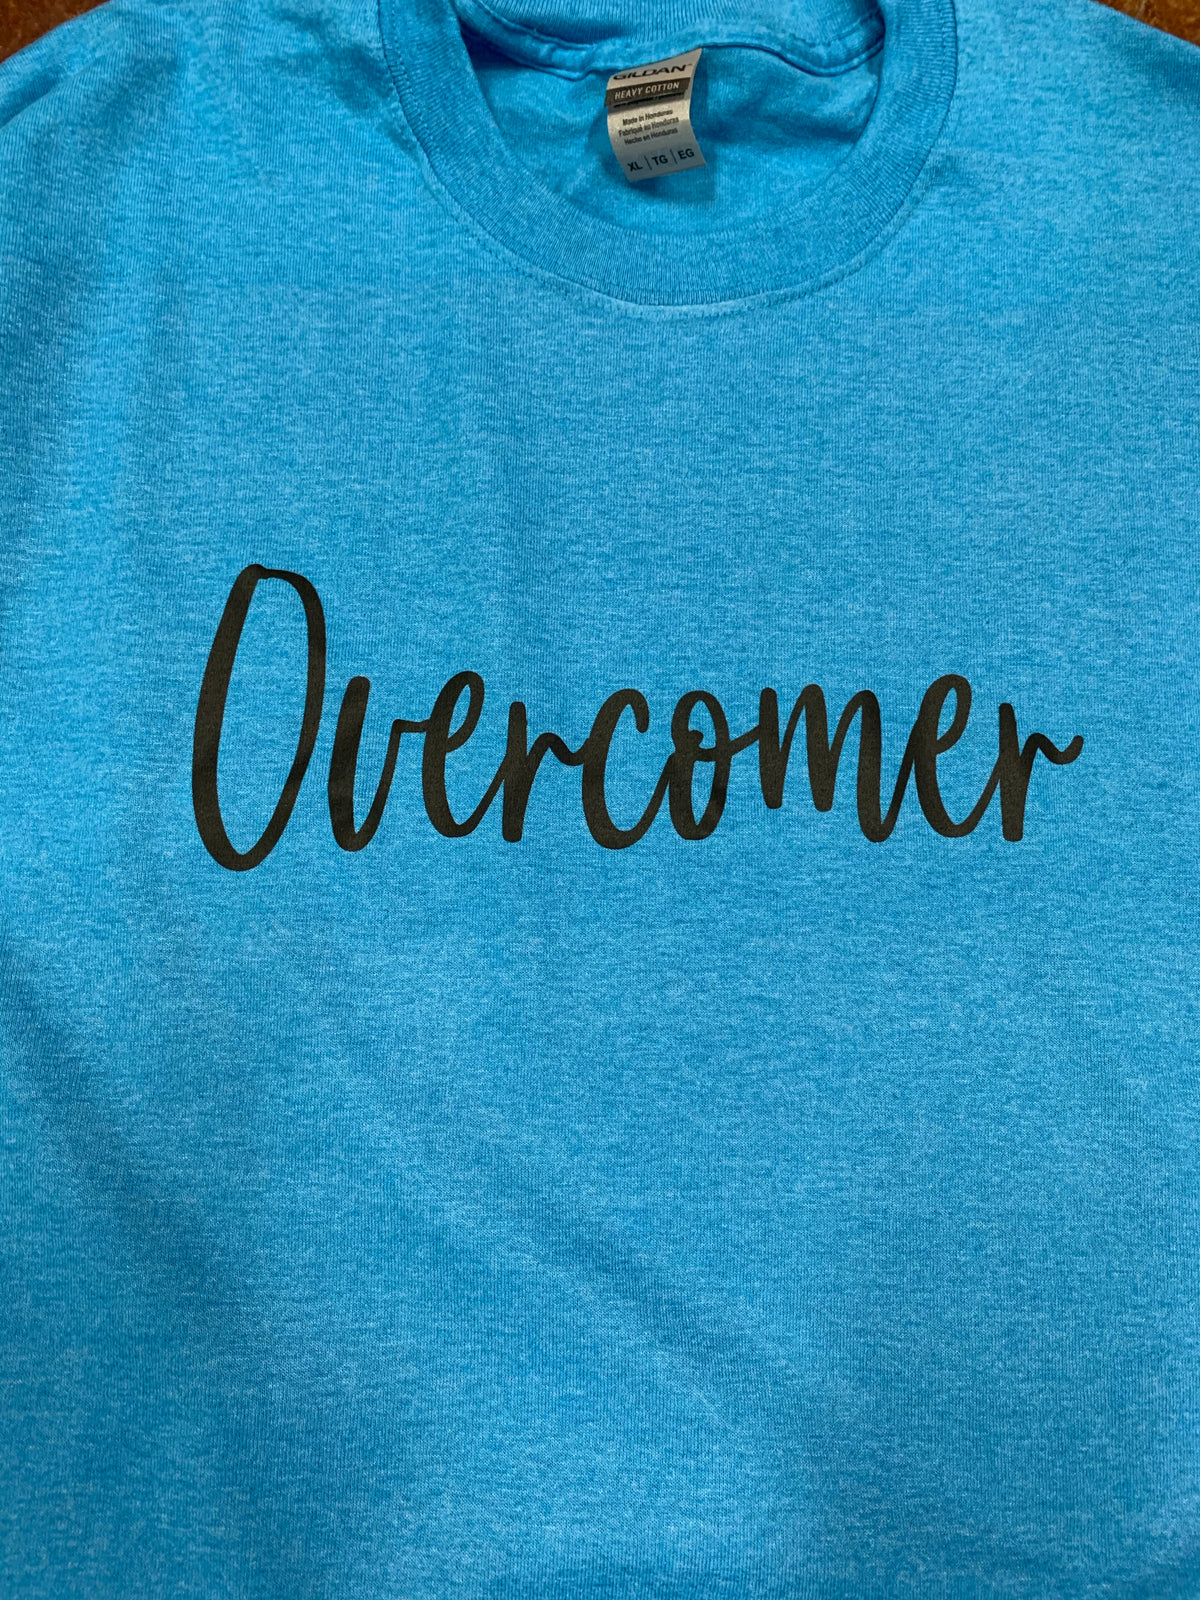 Overcomer. $6 $8 For Long Sleeves! Shirt Color — Barlow